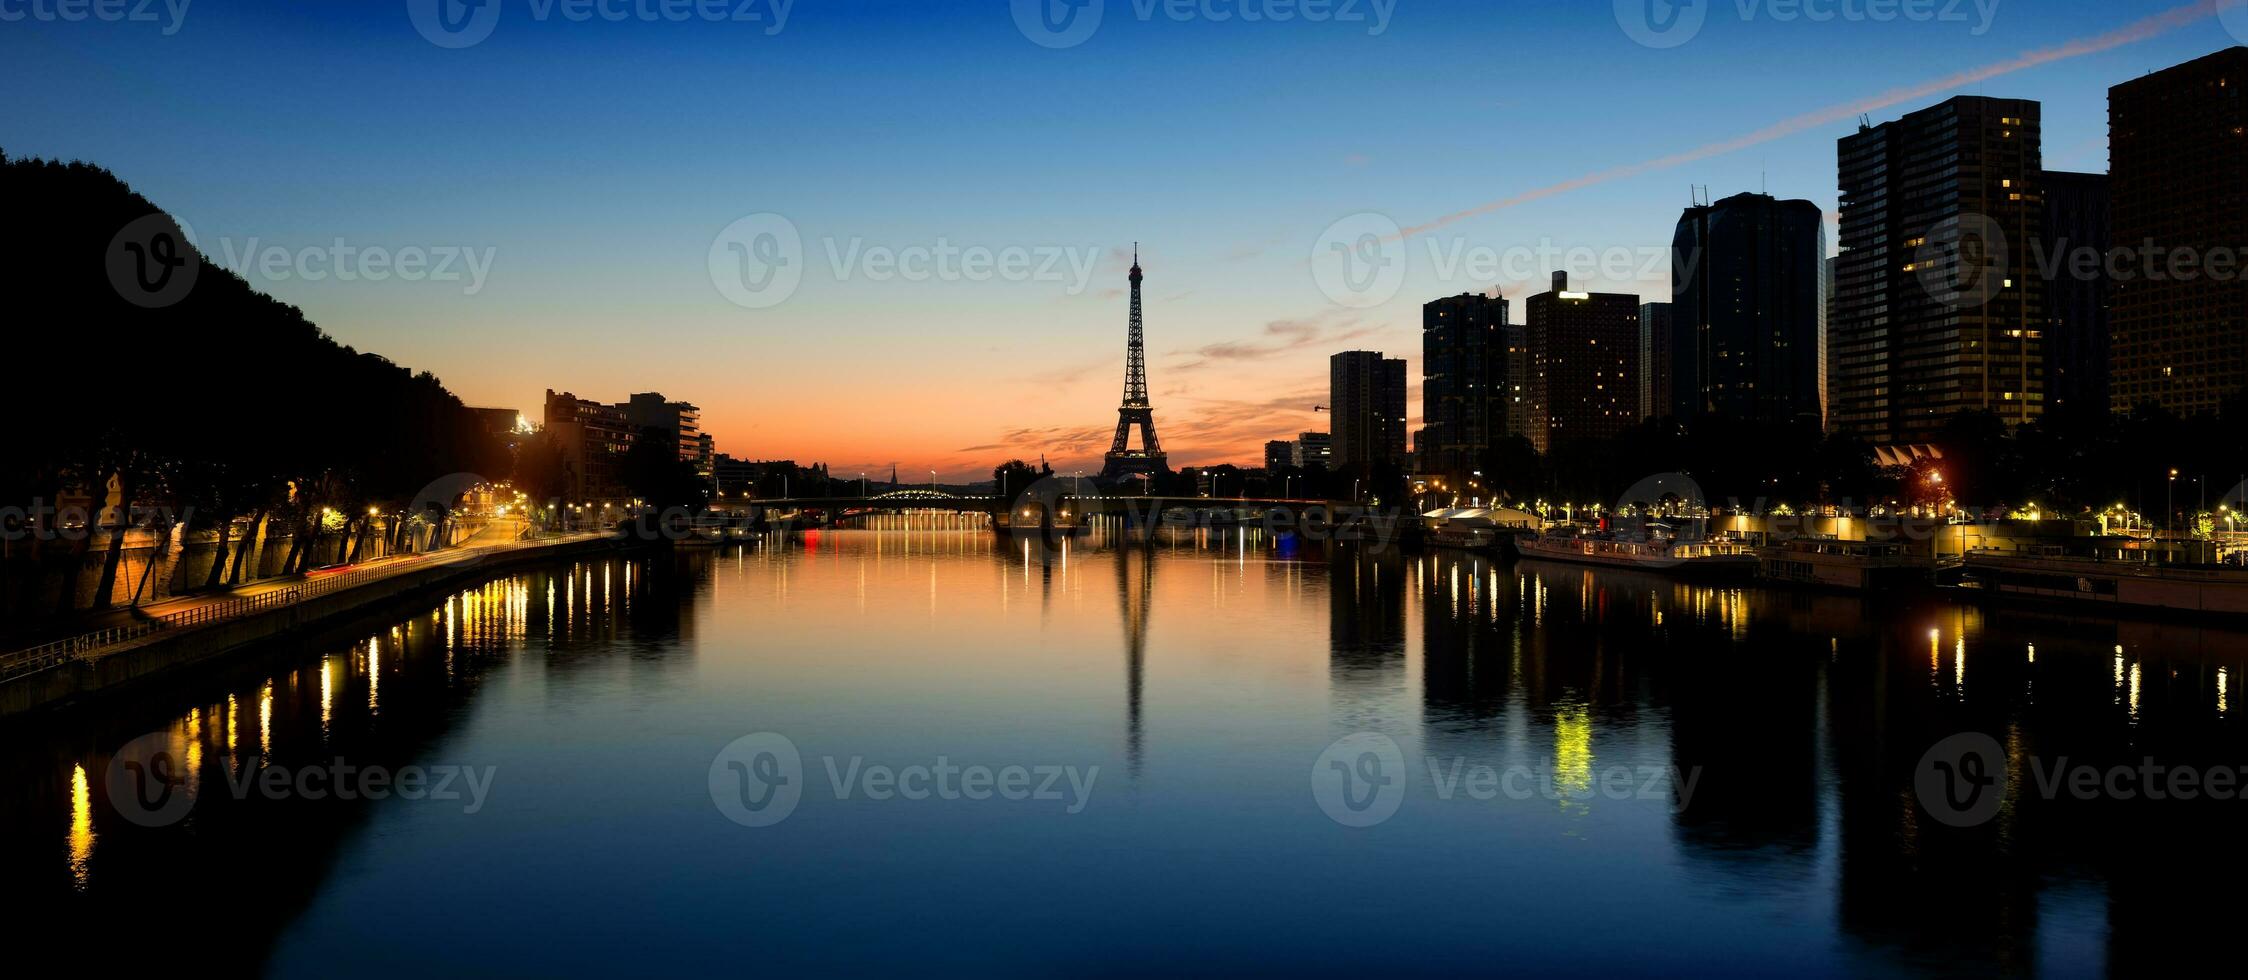 Parisian morning landscape photo